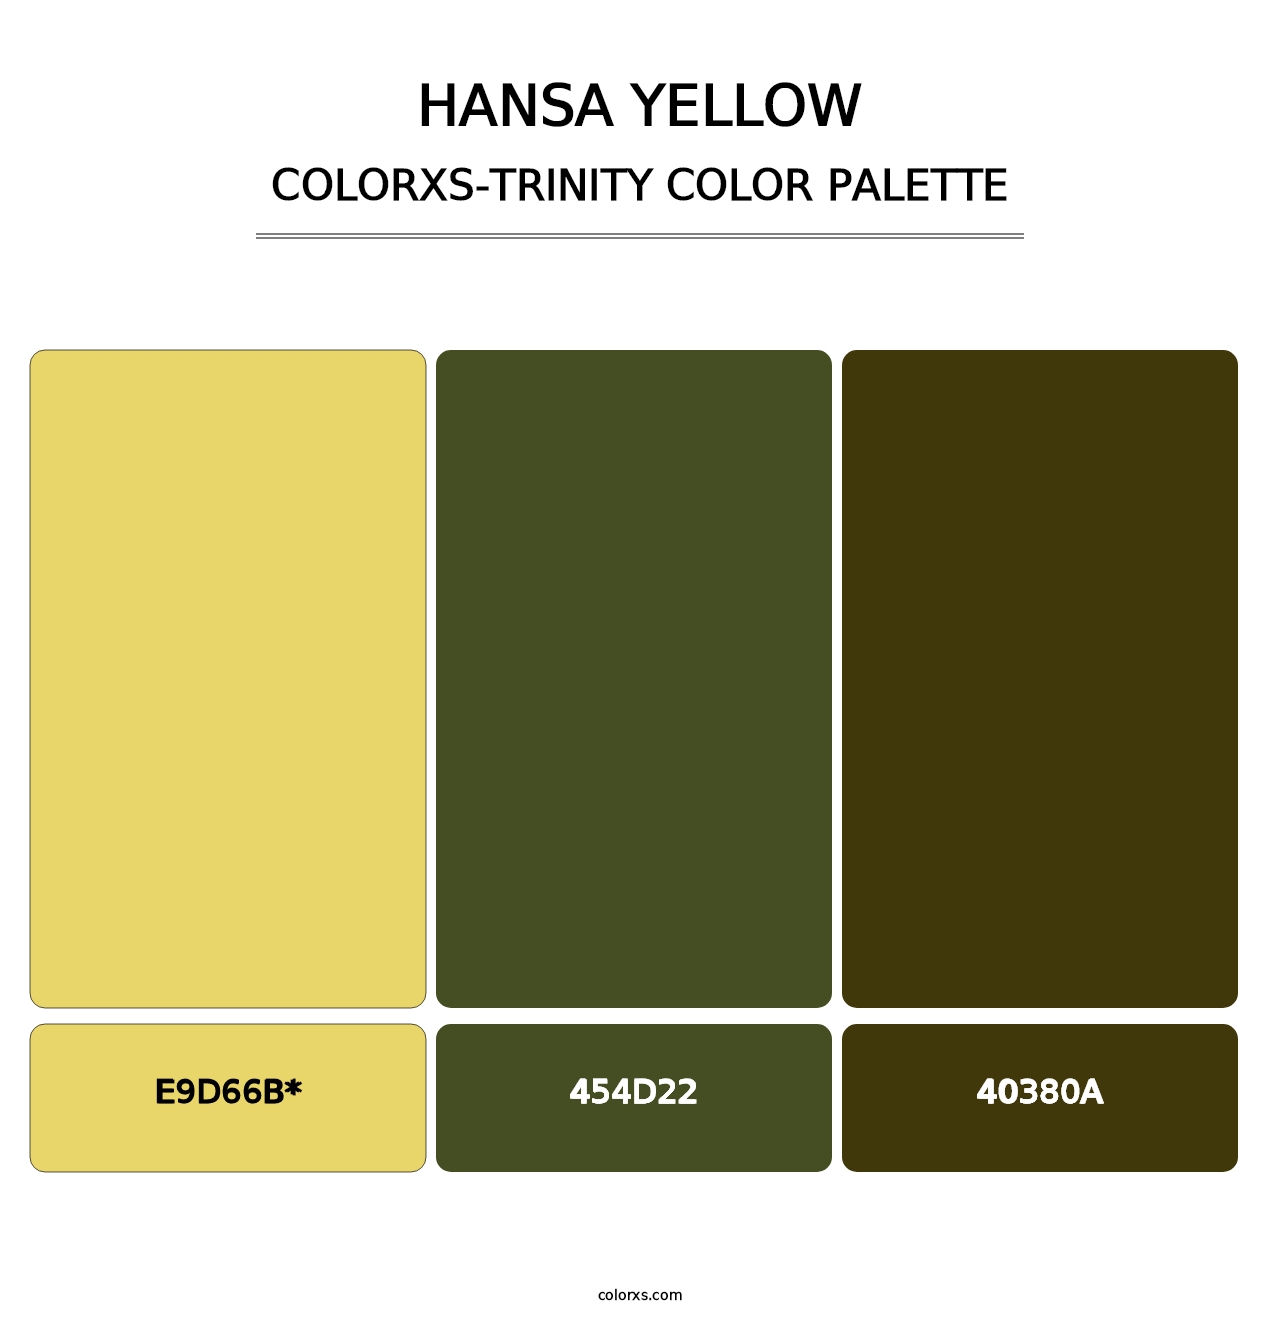 Hansa Yellow - Colorxs Trinity Palette